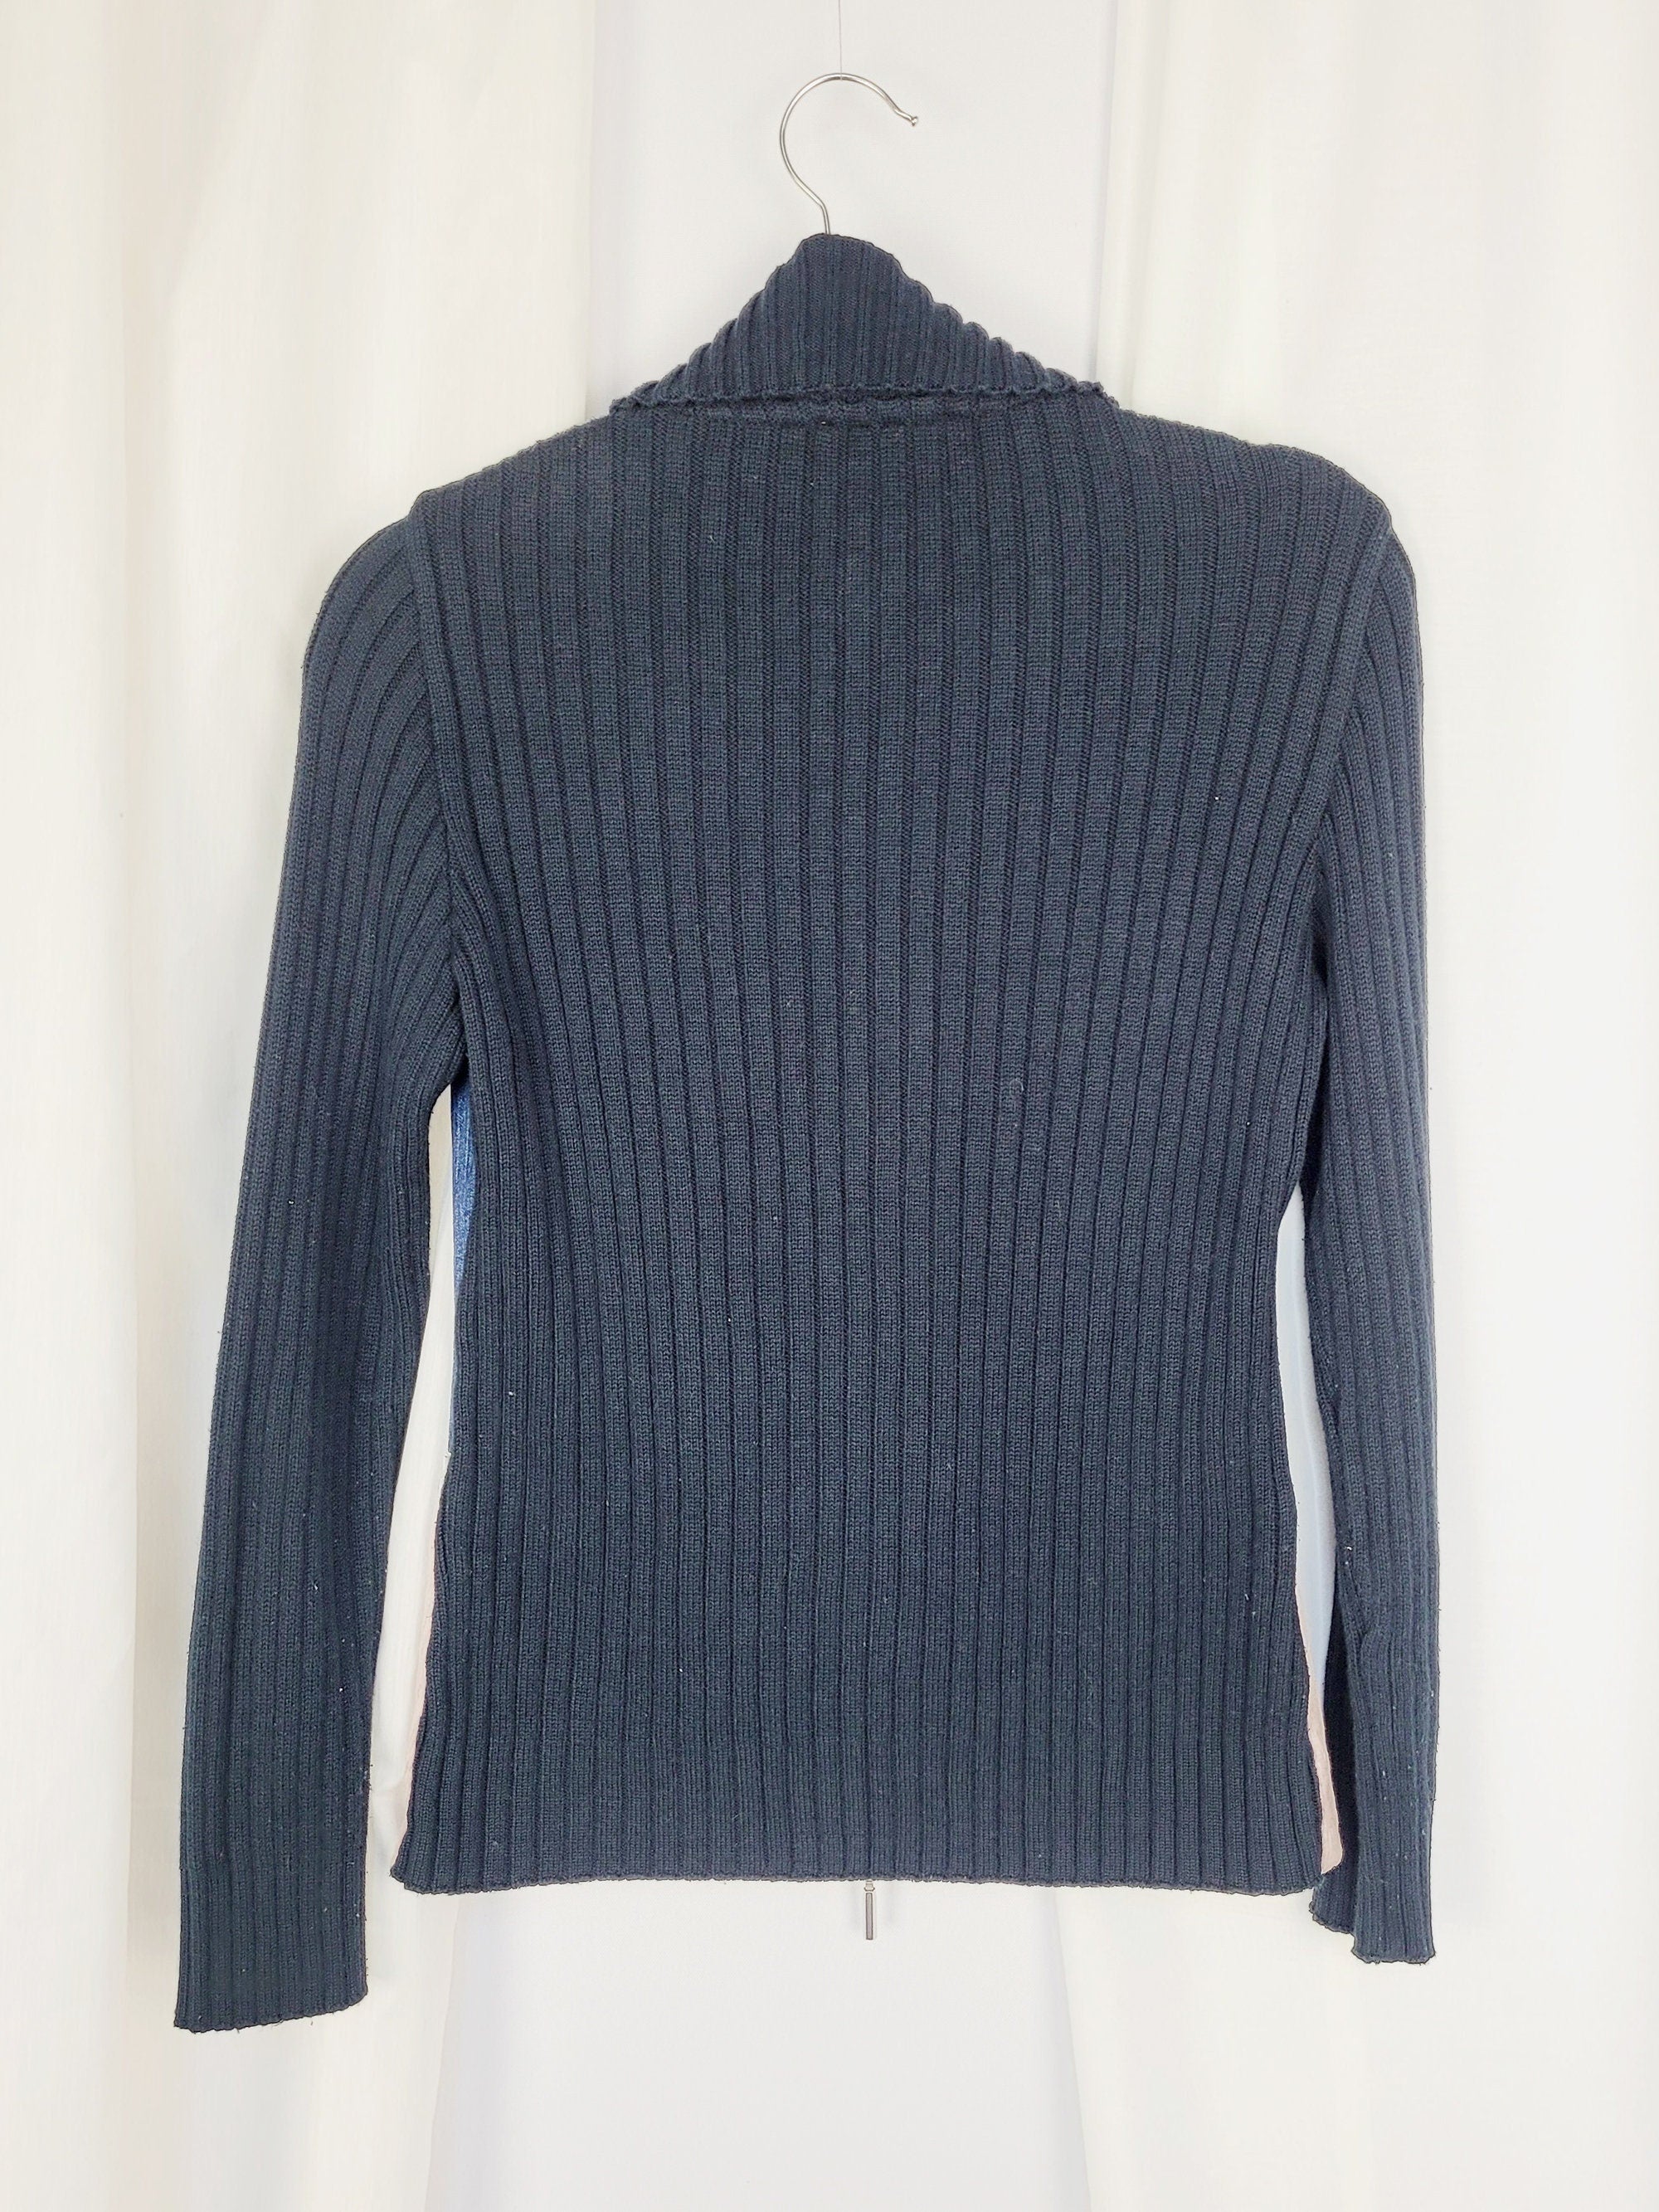 90s vintage retro denim knit combo zipped cardigan jacket